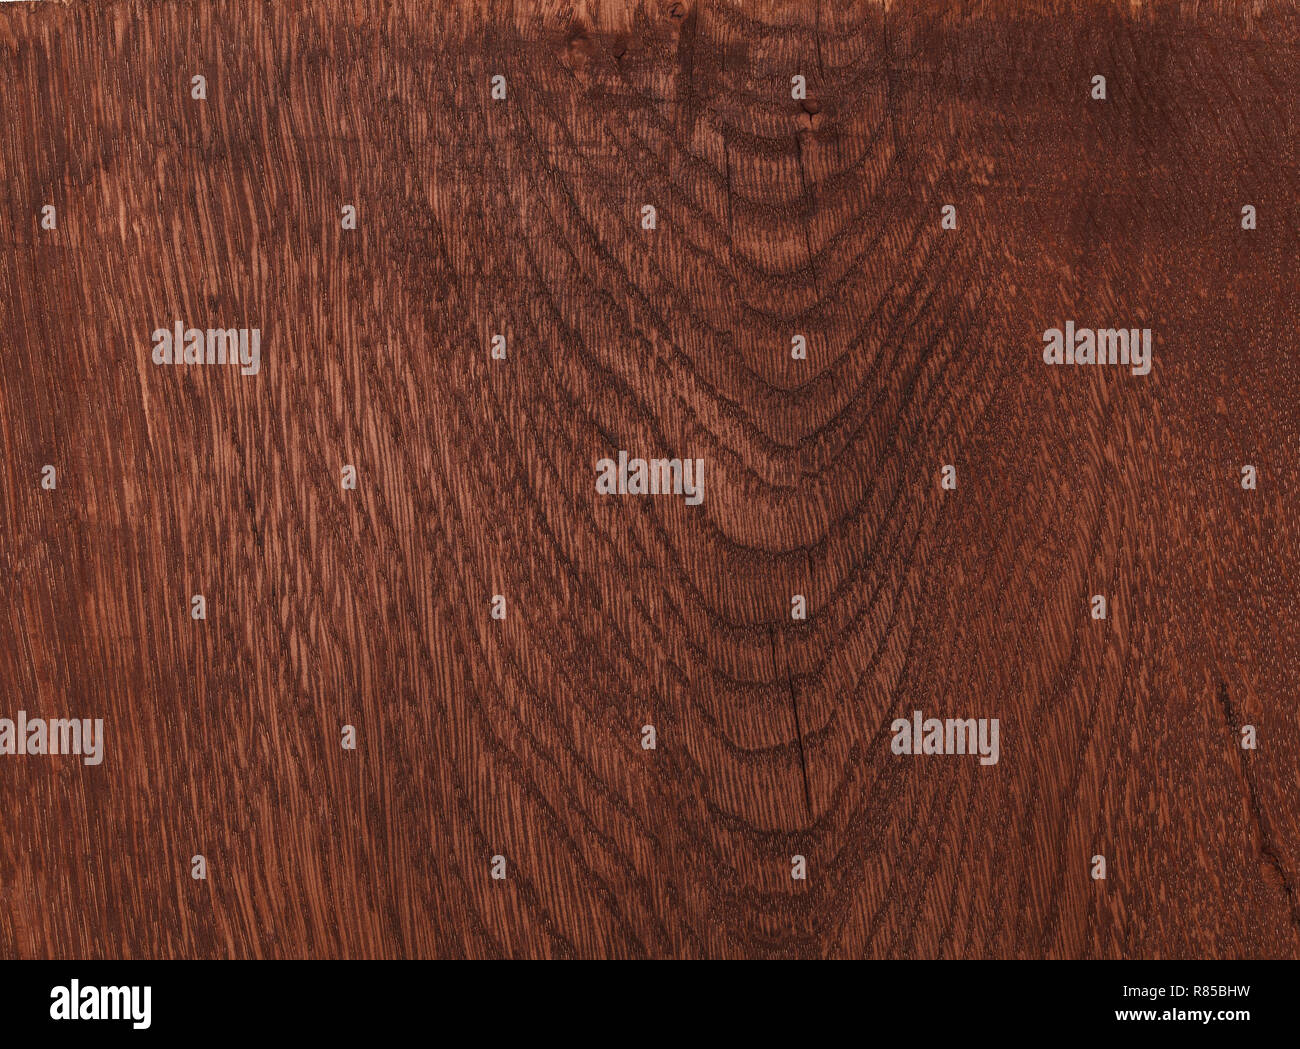 Background cut tree - texture oak planks Stock Photo - Alamy